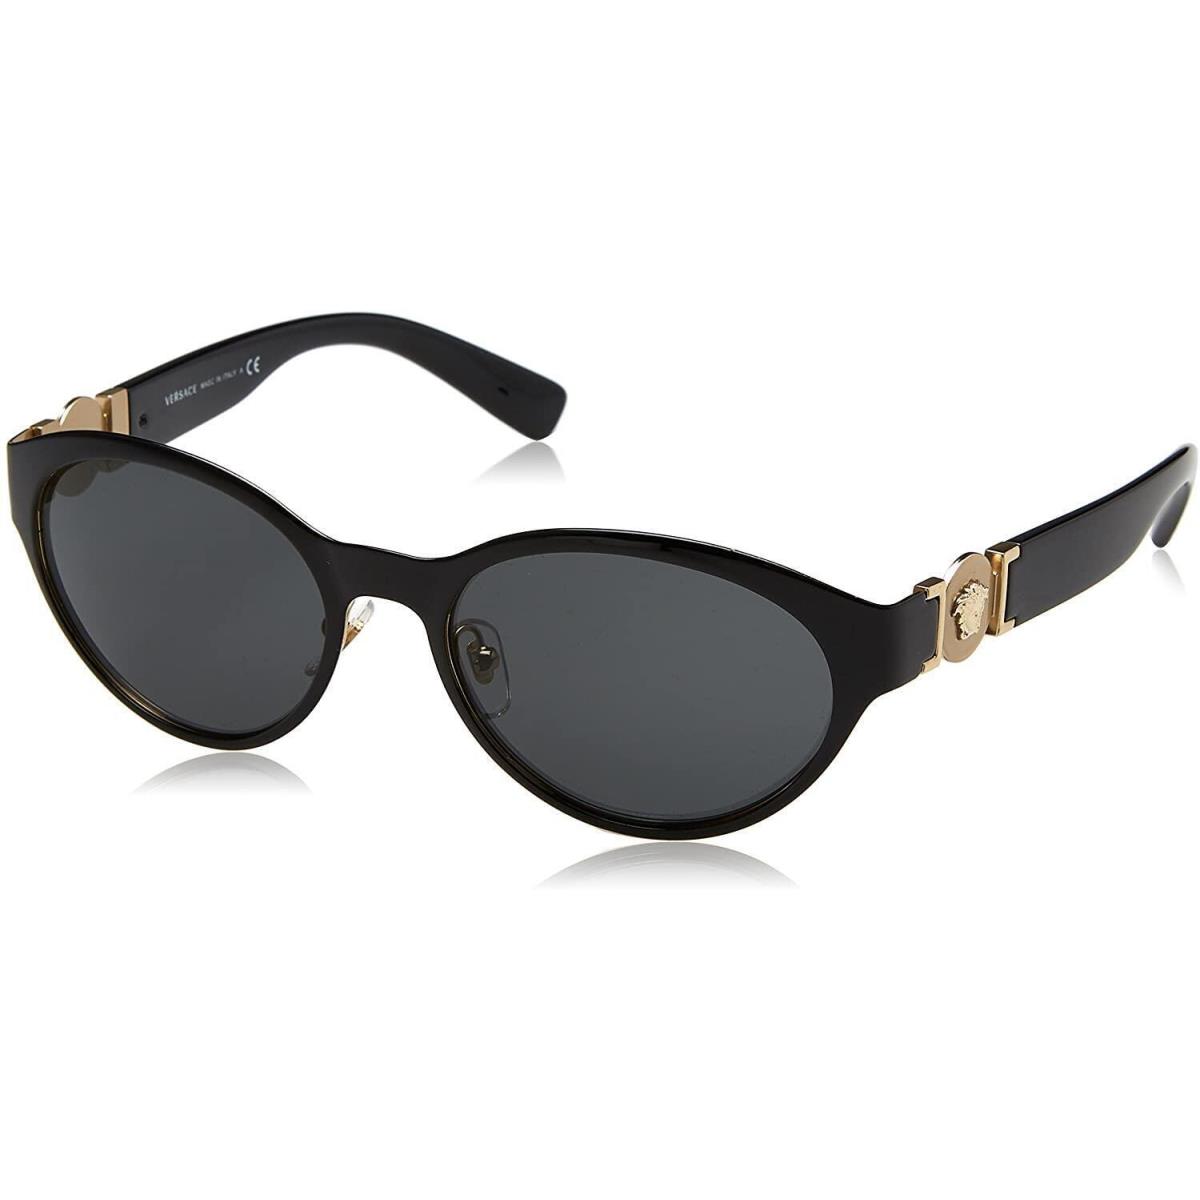 Versace Sunglasses VE2179 1291/87 Black Gold Frame Gray Lens 55MM - Black Pale Gold Frame, Gray Lens